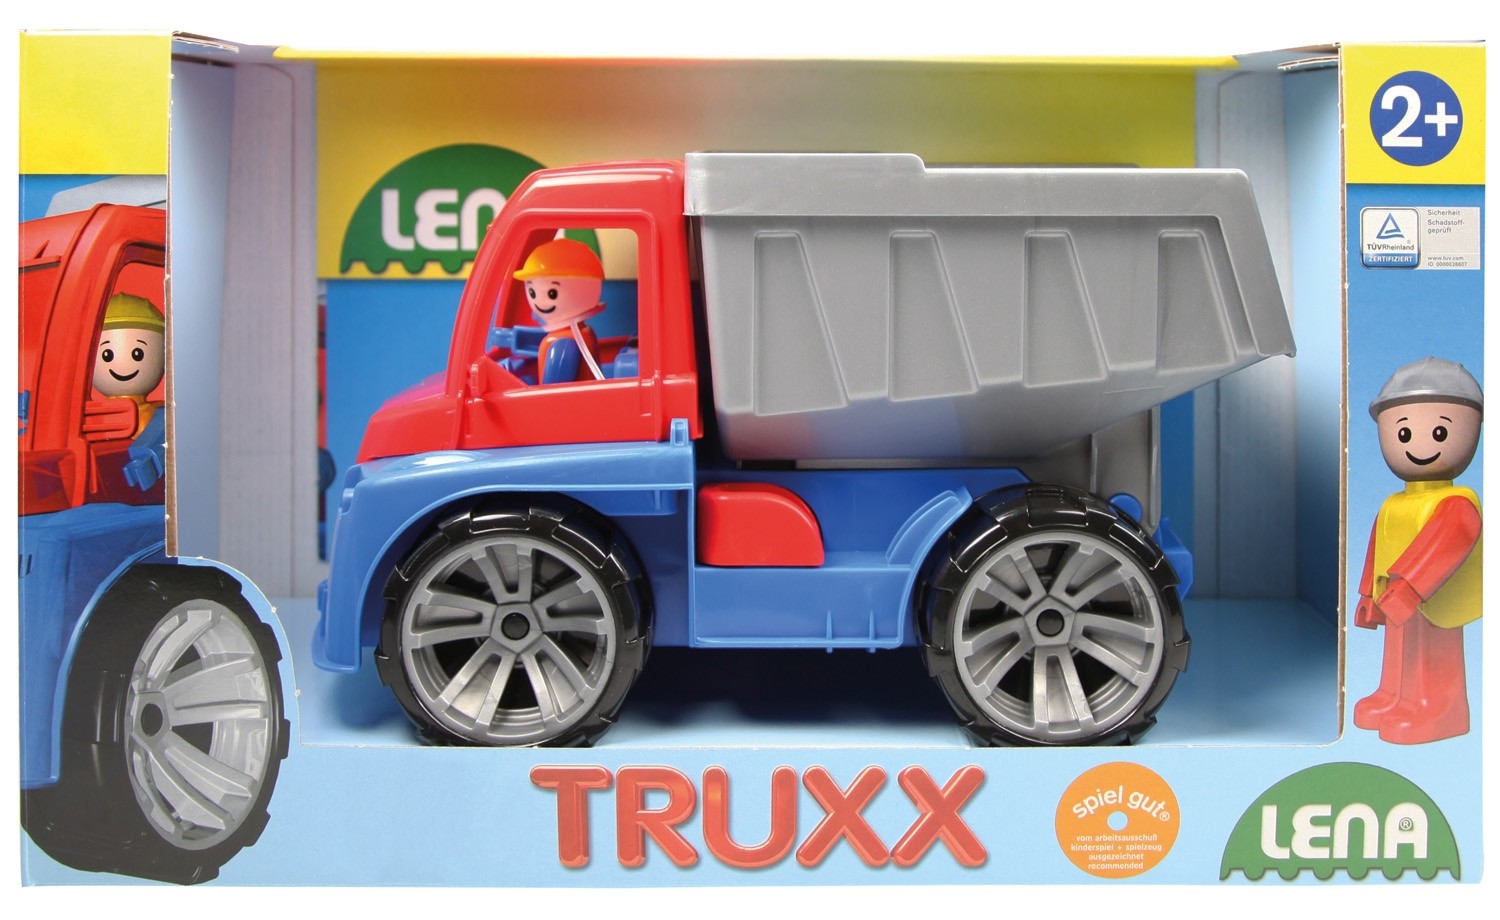 Lena TRUXX 04410 veicolo giocattolo